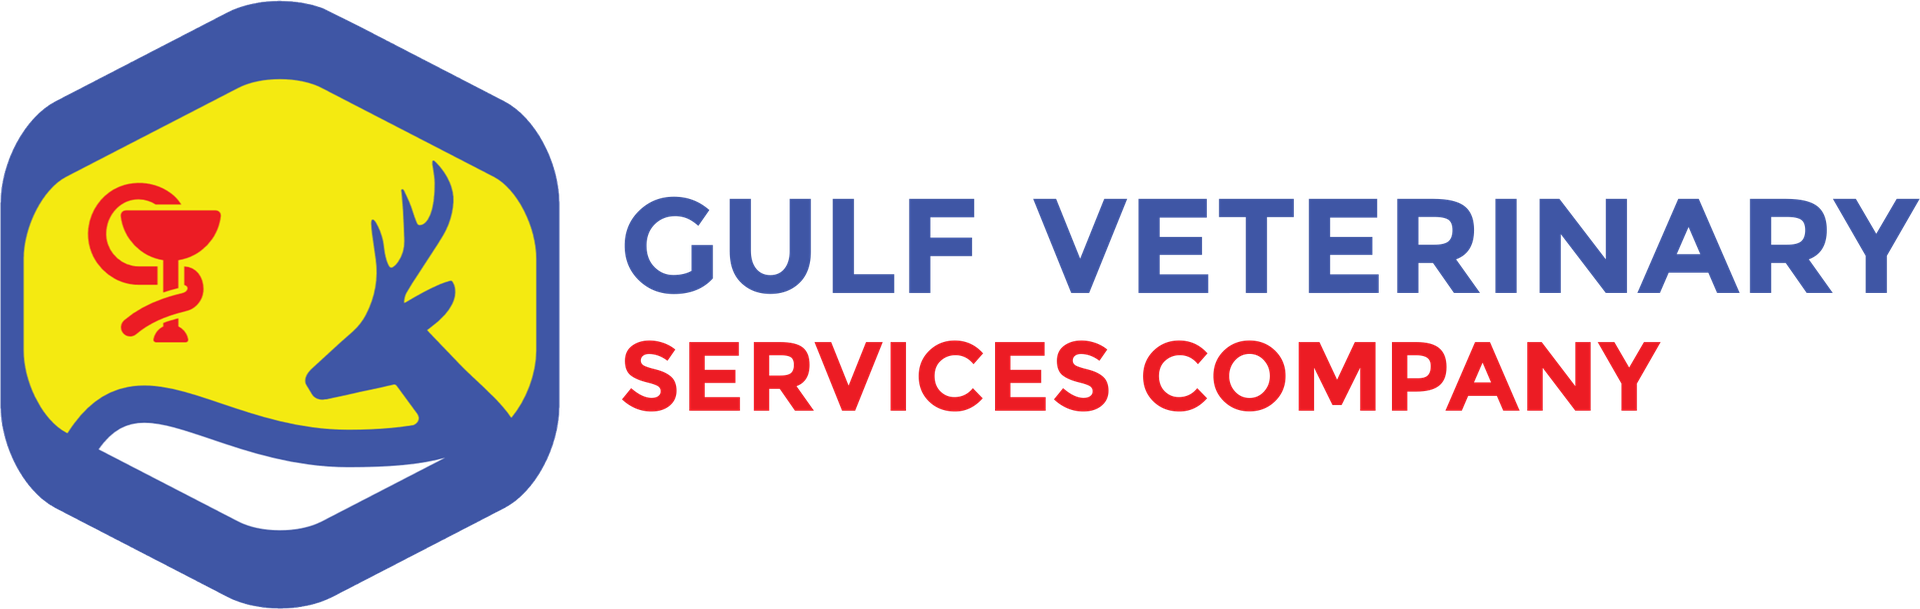 Gulf Veterinary Services